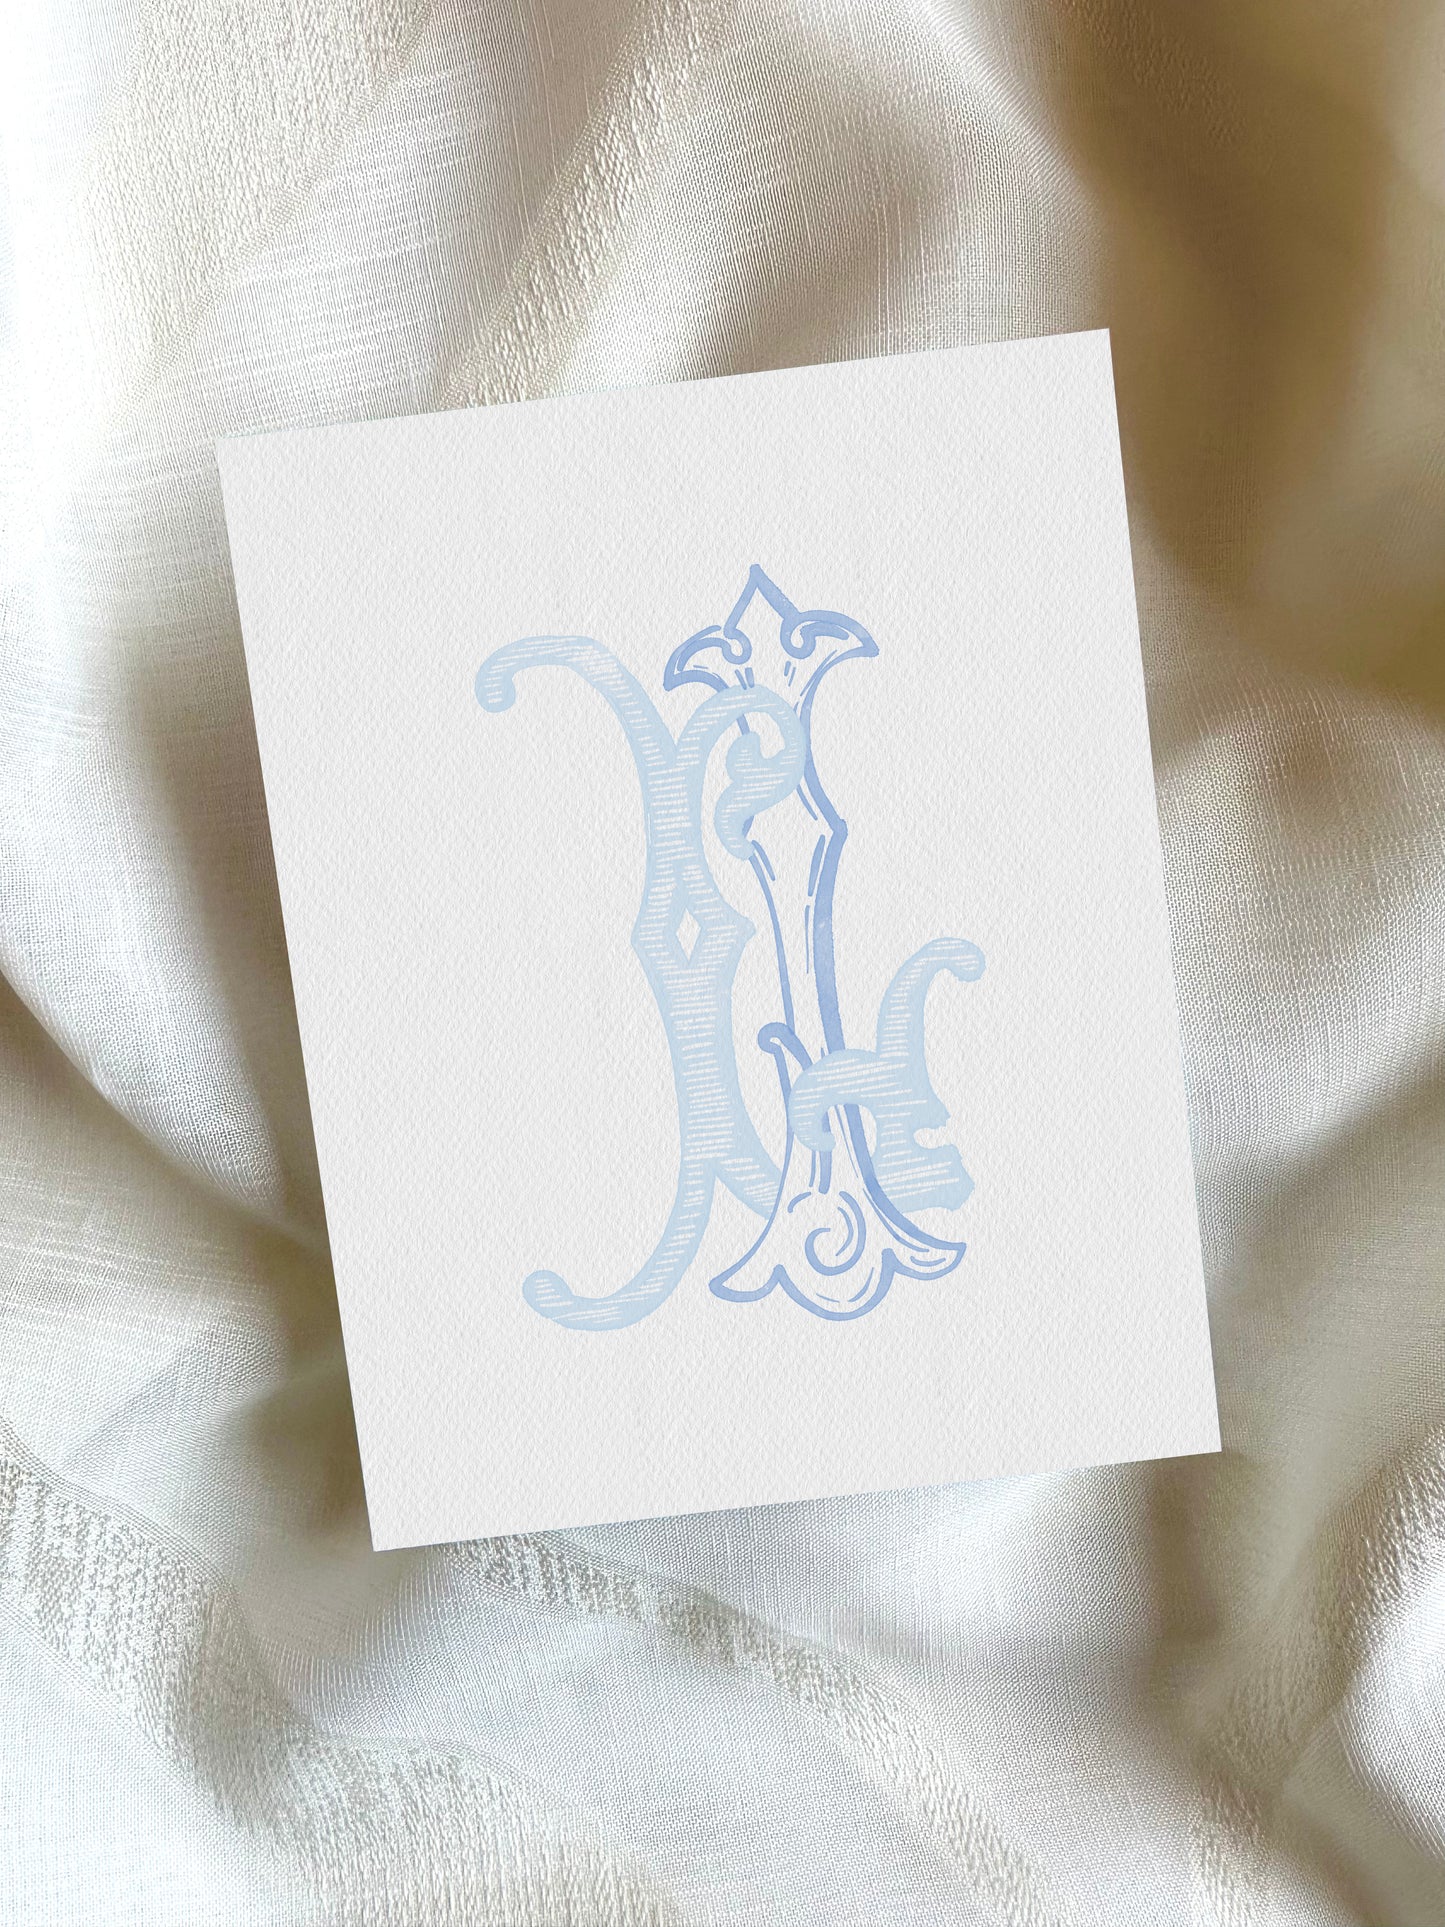 2 Letter Monogram with Letters LI IL | Digital Download - Wedding Monogram SVG, Personal Logo, Wedding Logo for Wedding Invitations The Wedding Crest Lab